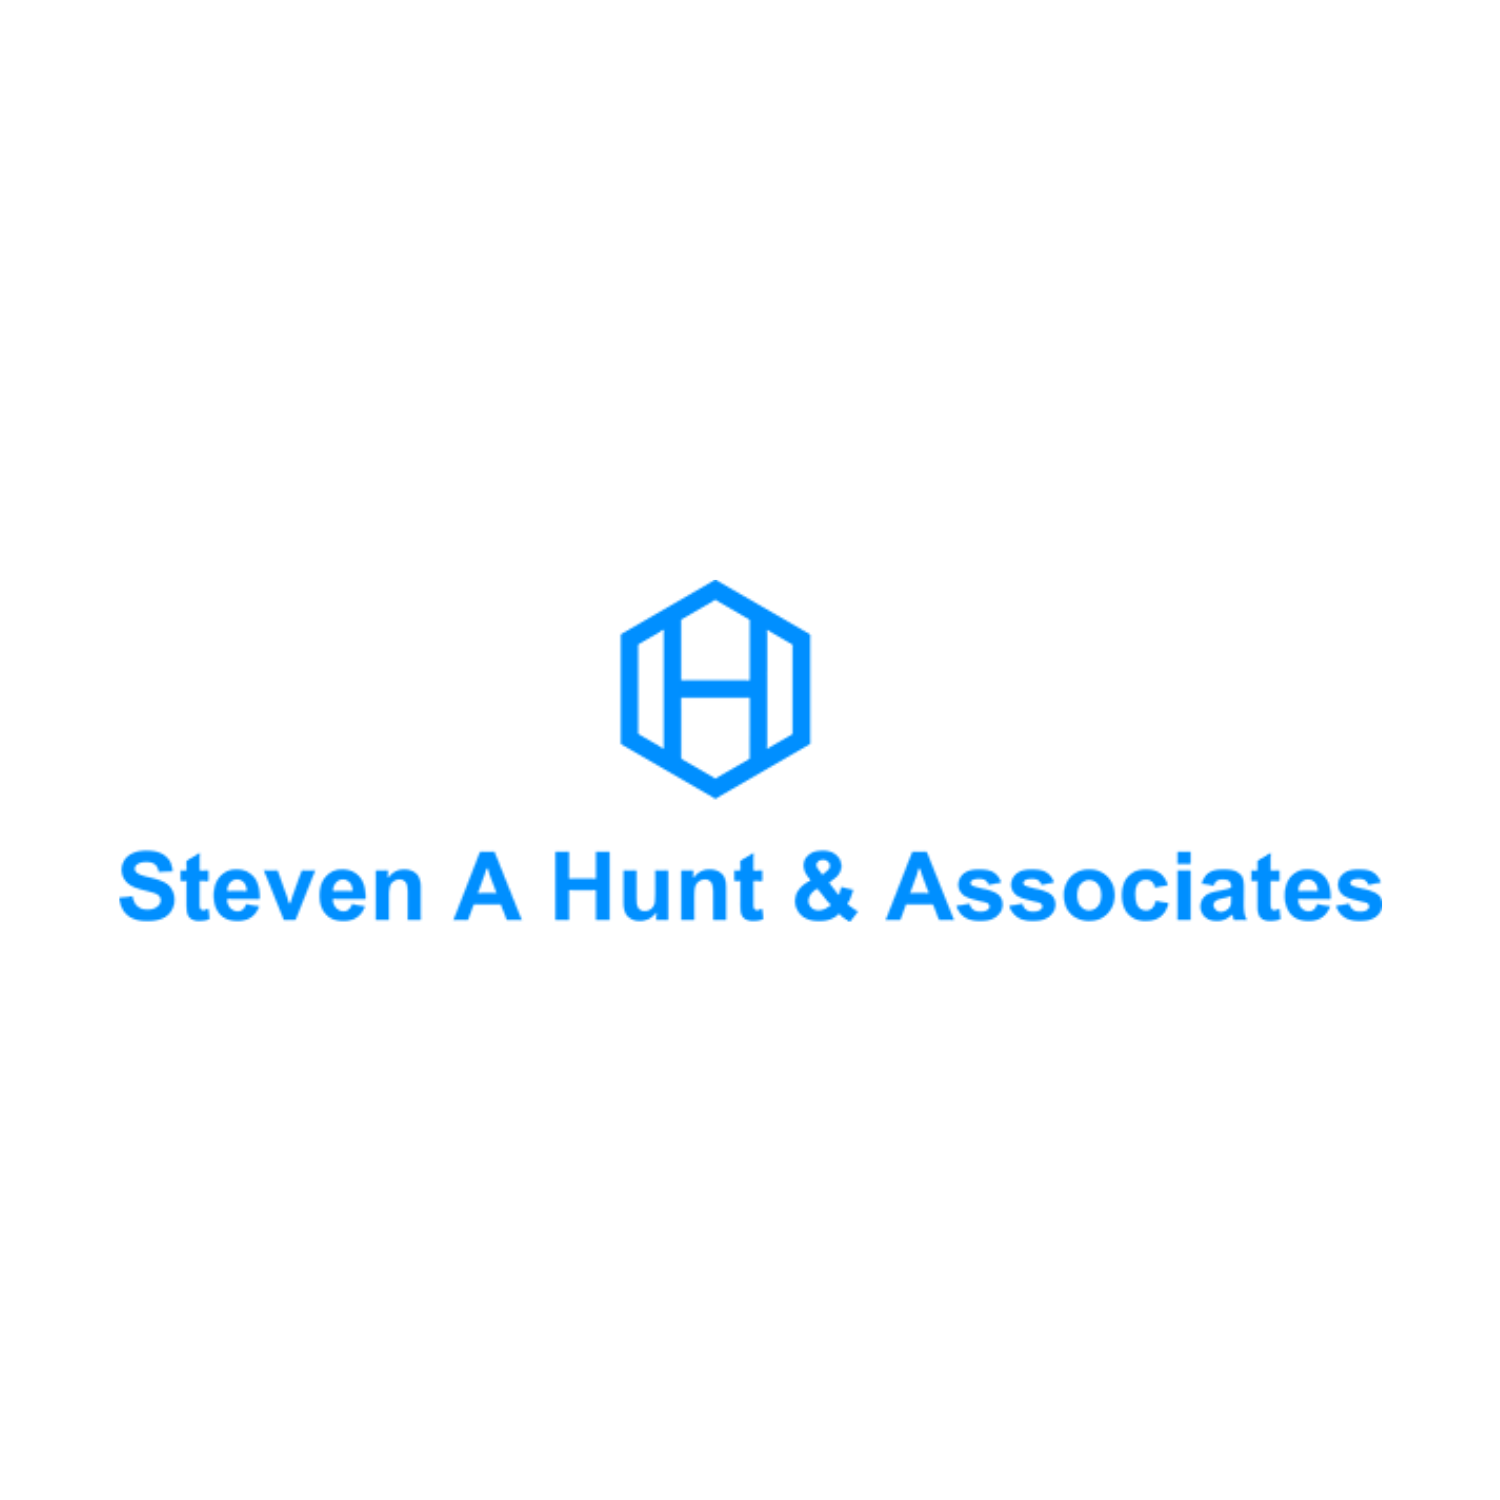 Steven A Hunt & Associates